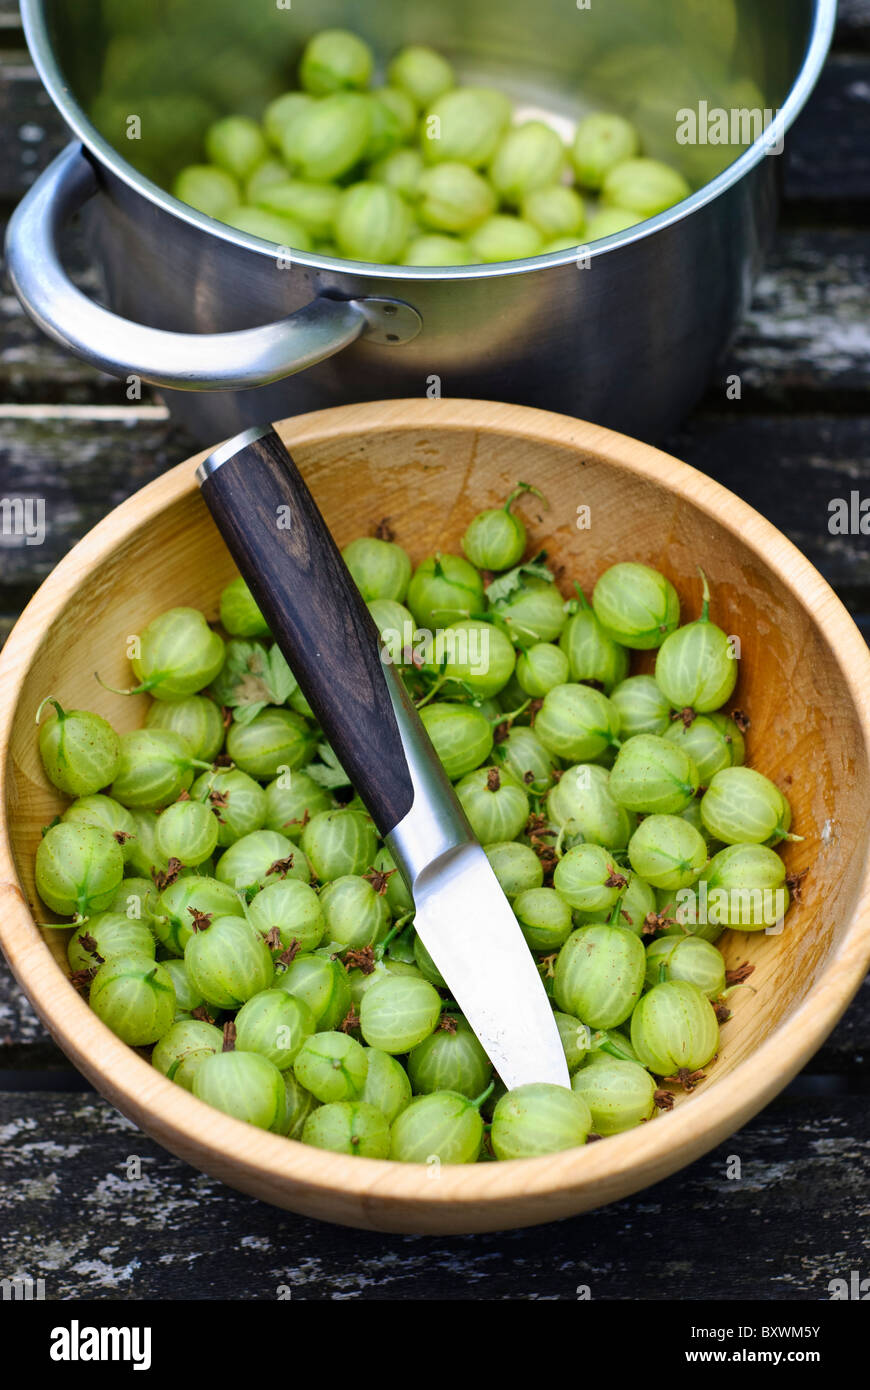 Preparing fresh homegrown gooseberries for cooking Stock Photo